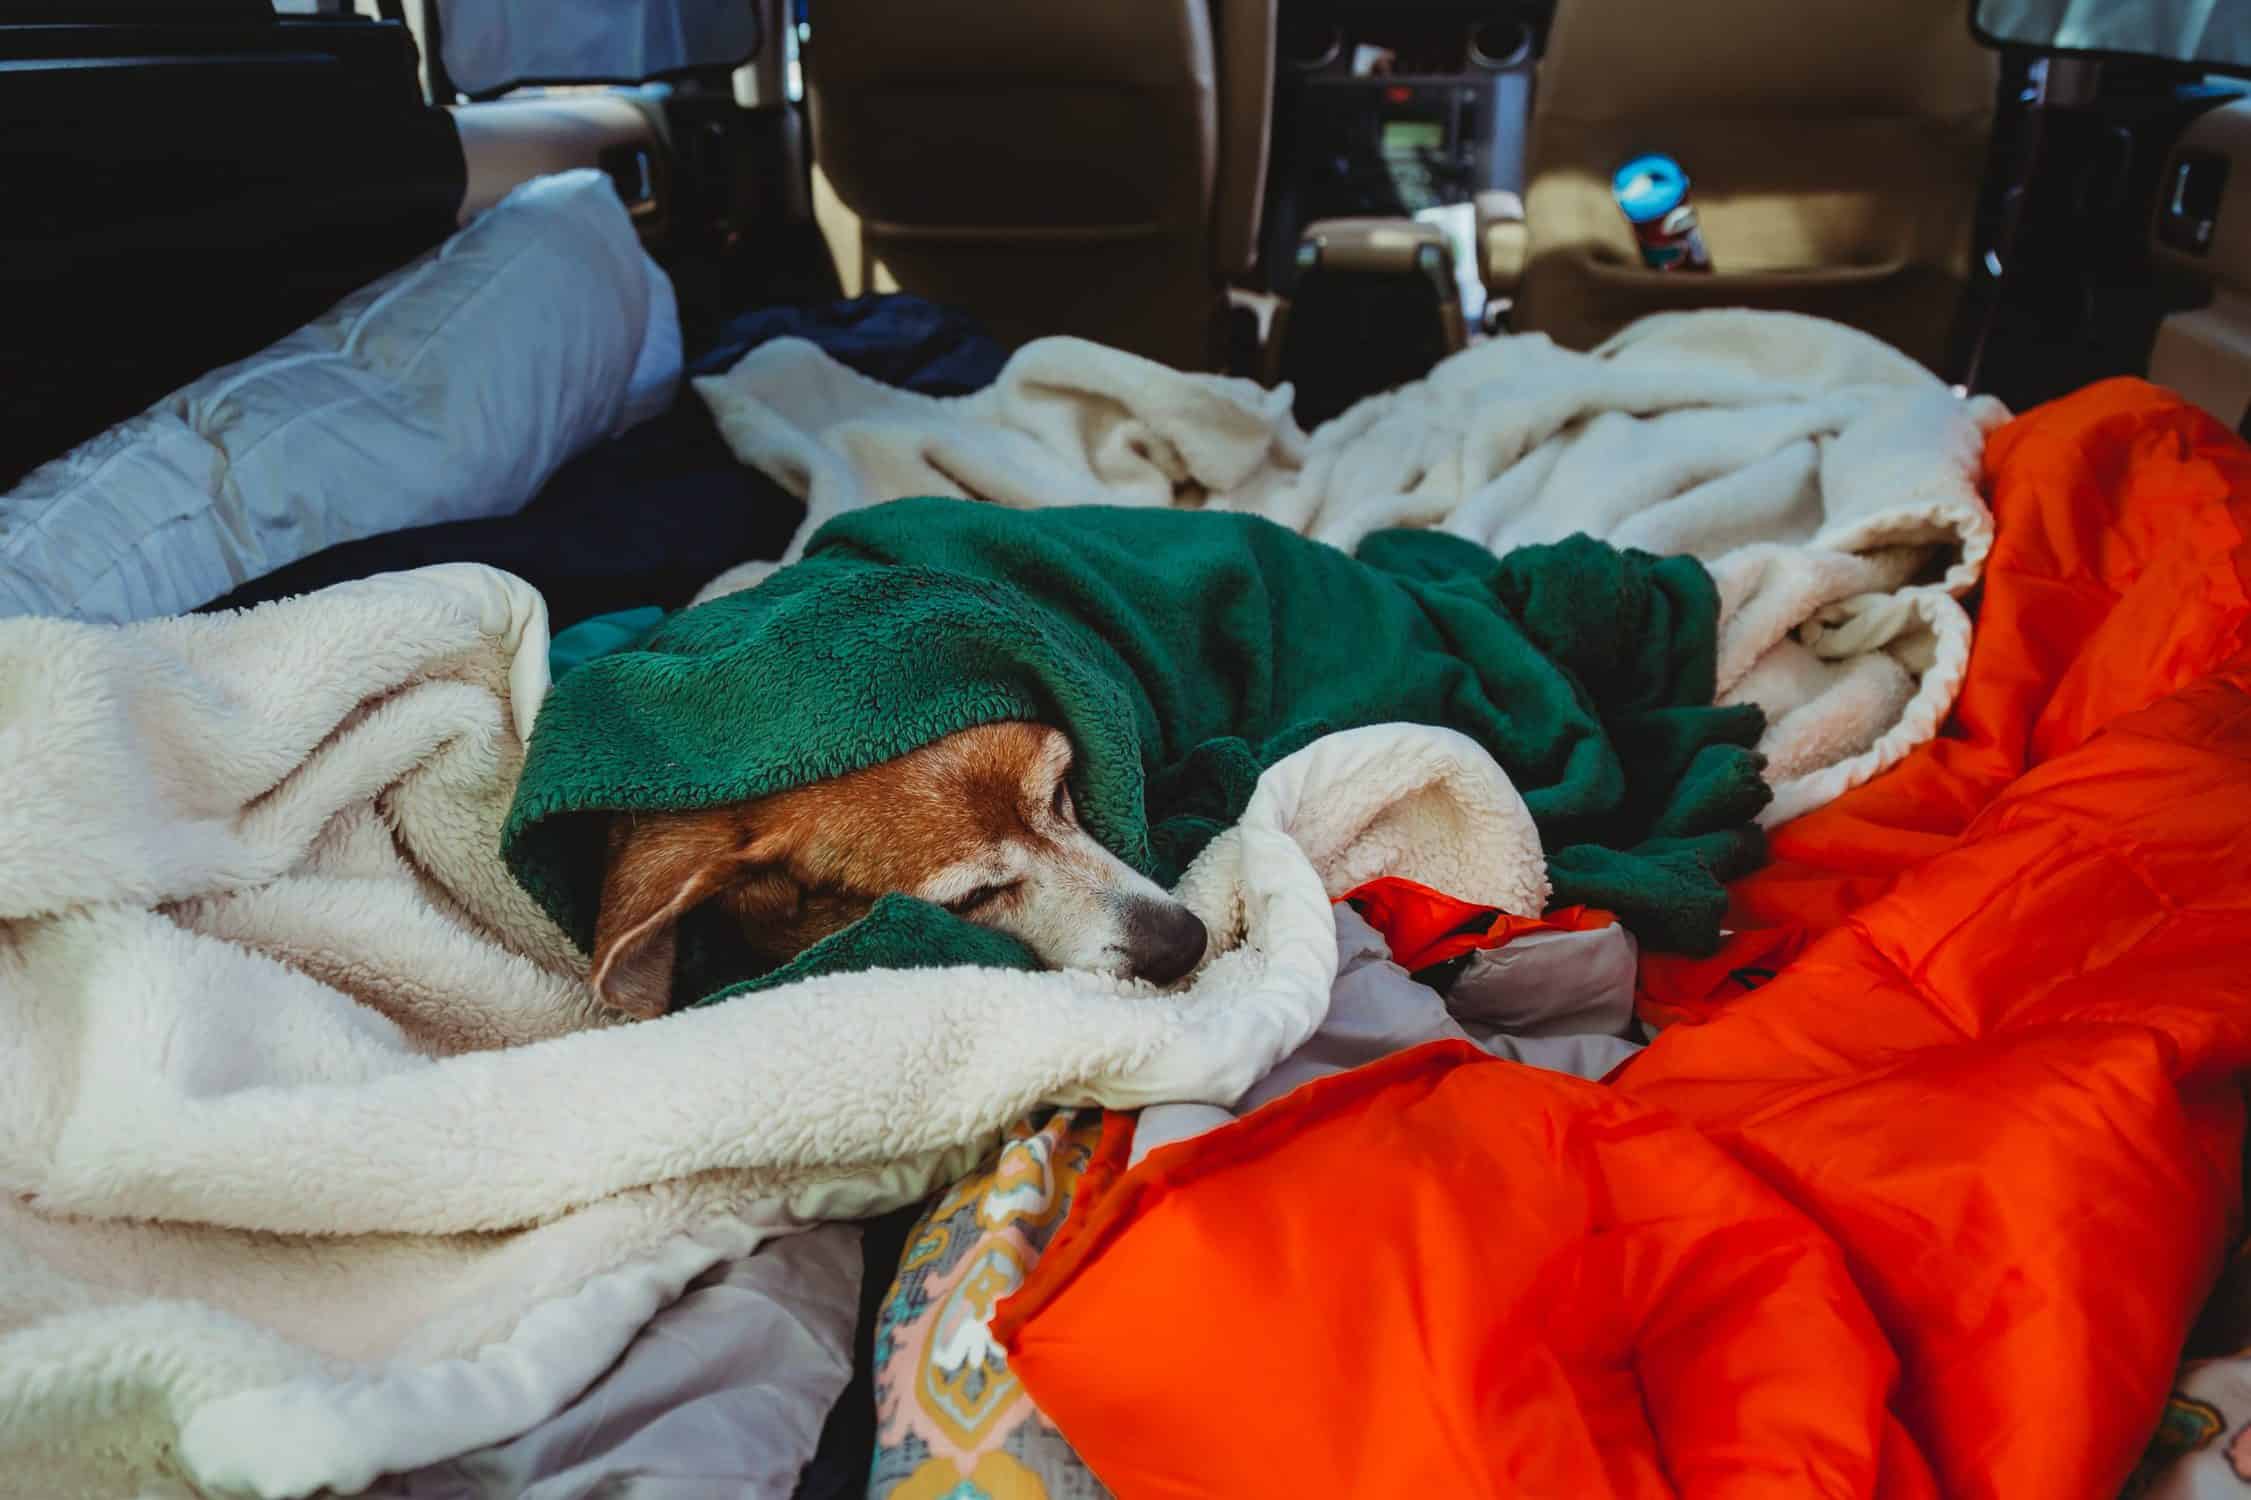 Winter car camping with kids sleeping setup